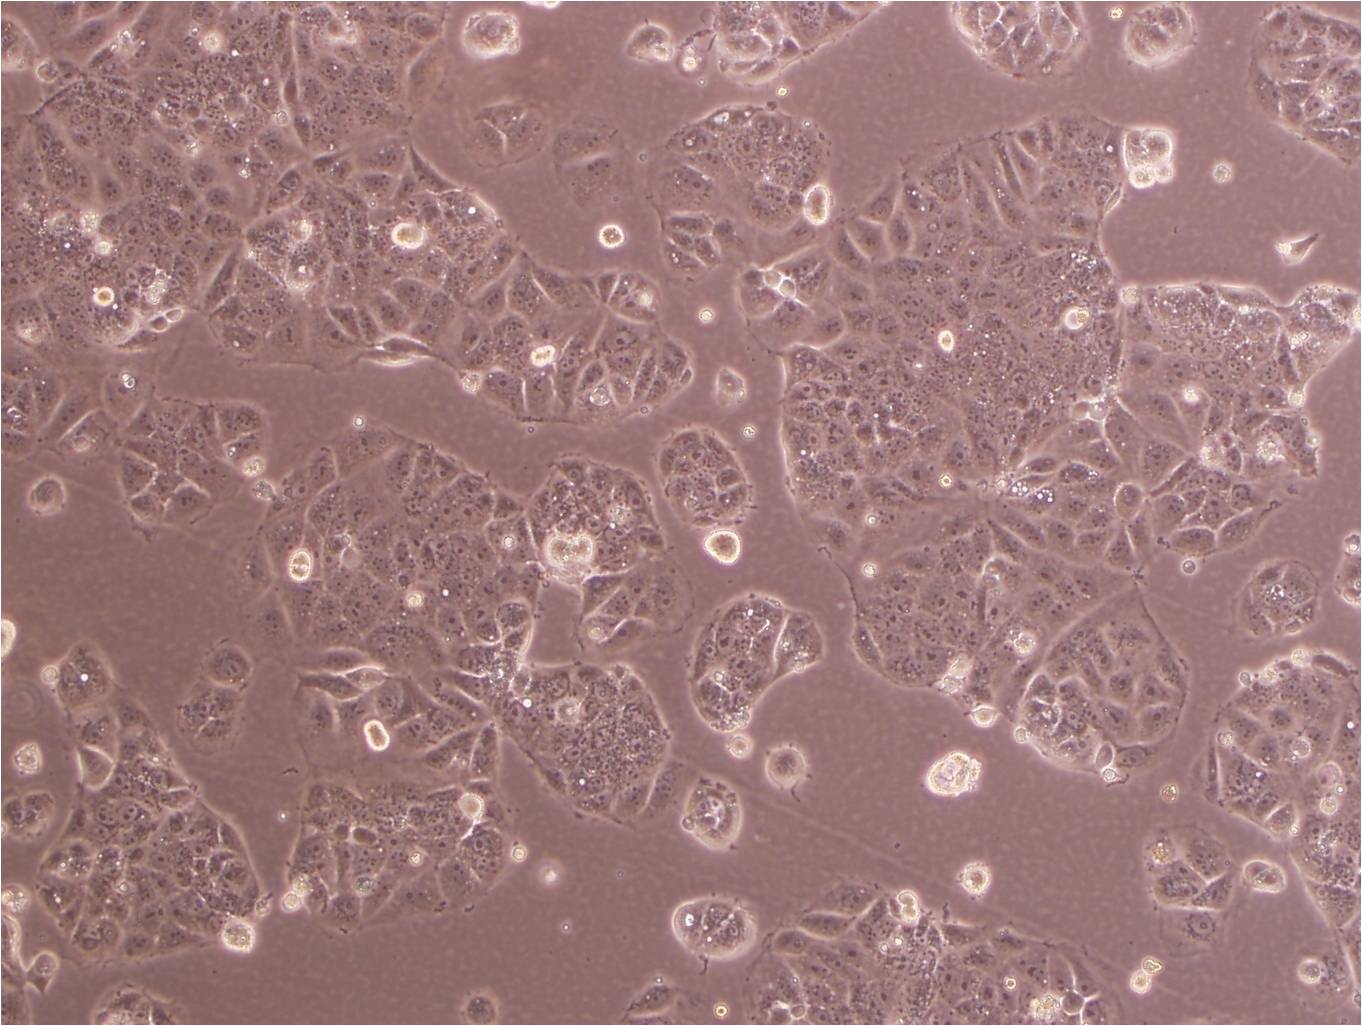 HFLS-RA fibroblast cells类风湿关节炎成纤维样滑膜细胞系